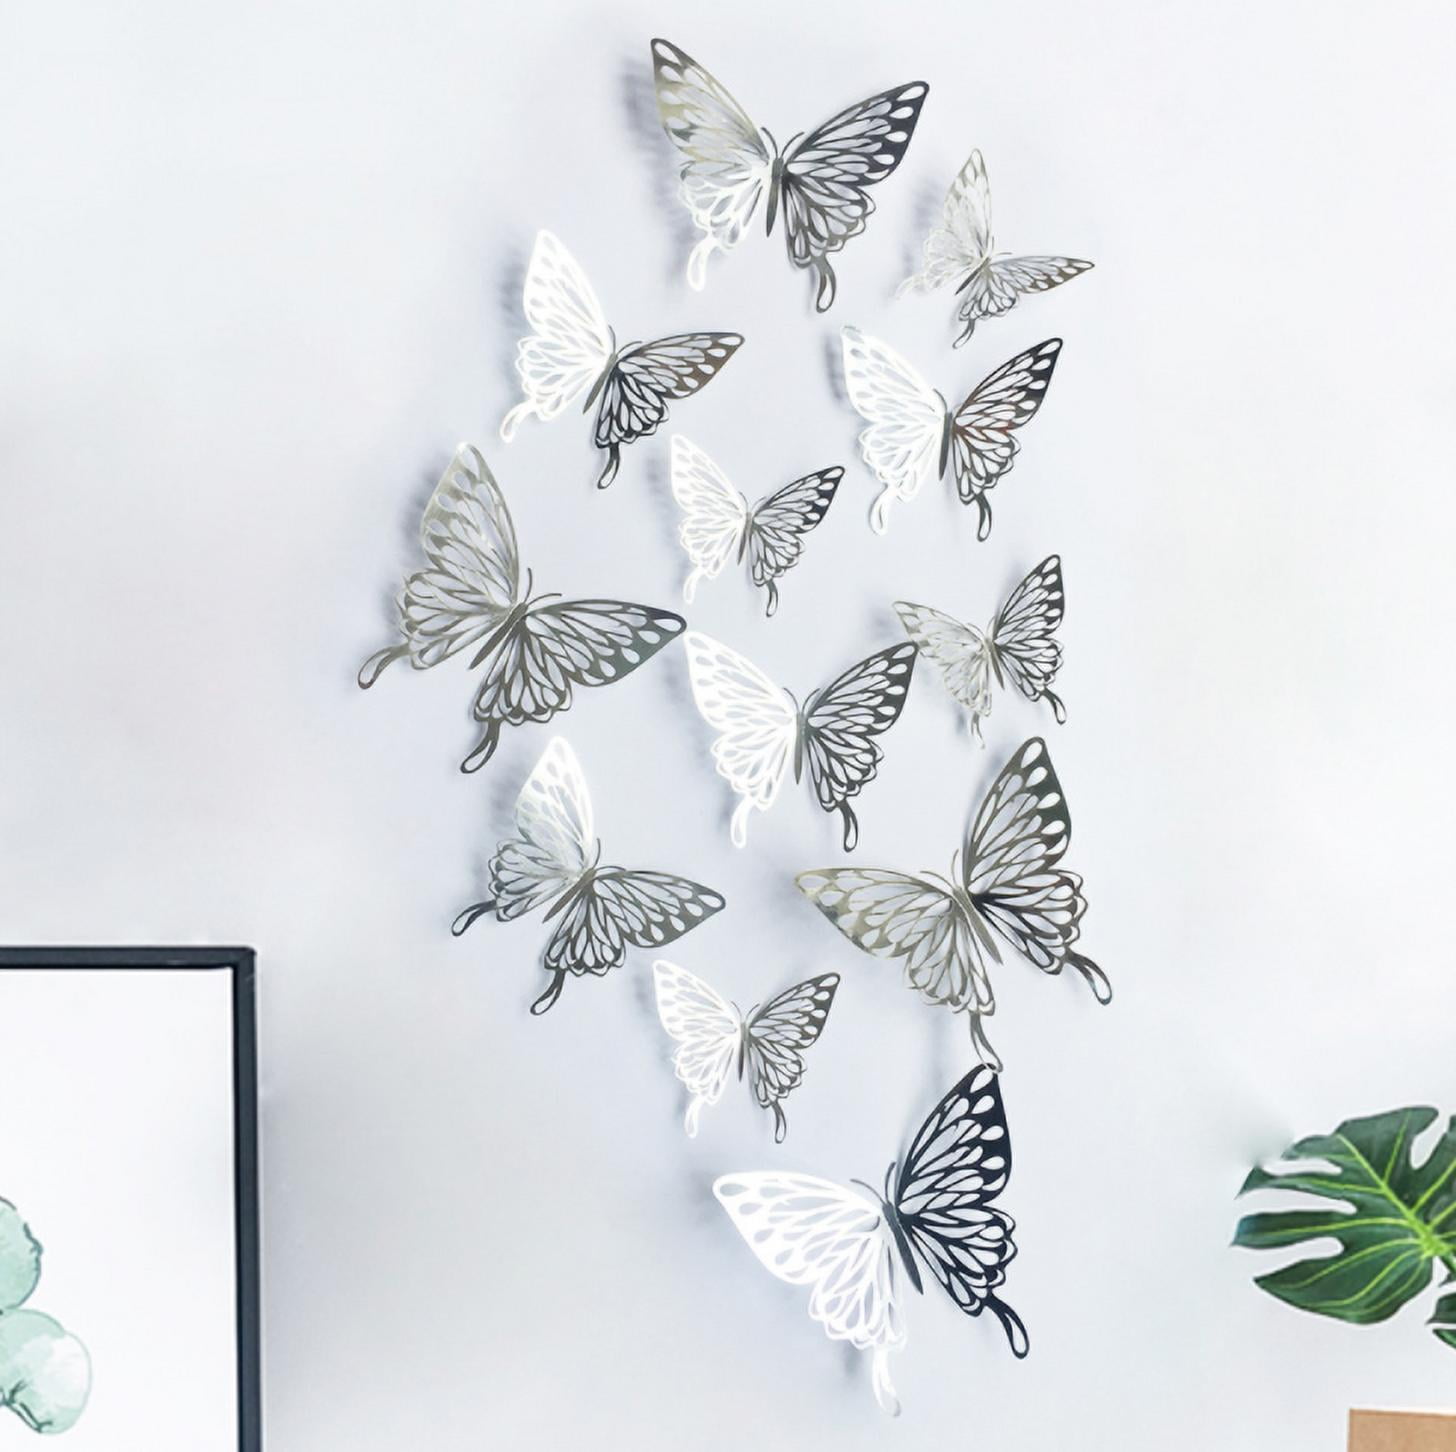 3D Butterfly Crystal Transparent Decor Wall Sticker Home Wall Decals 18Pcs Hot 